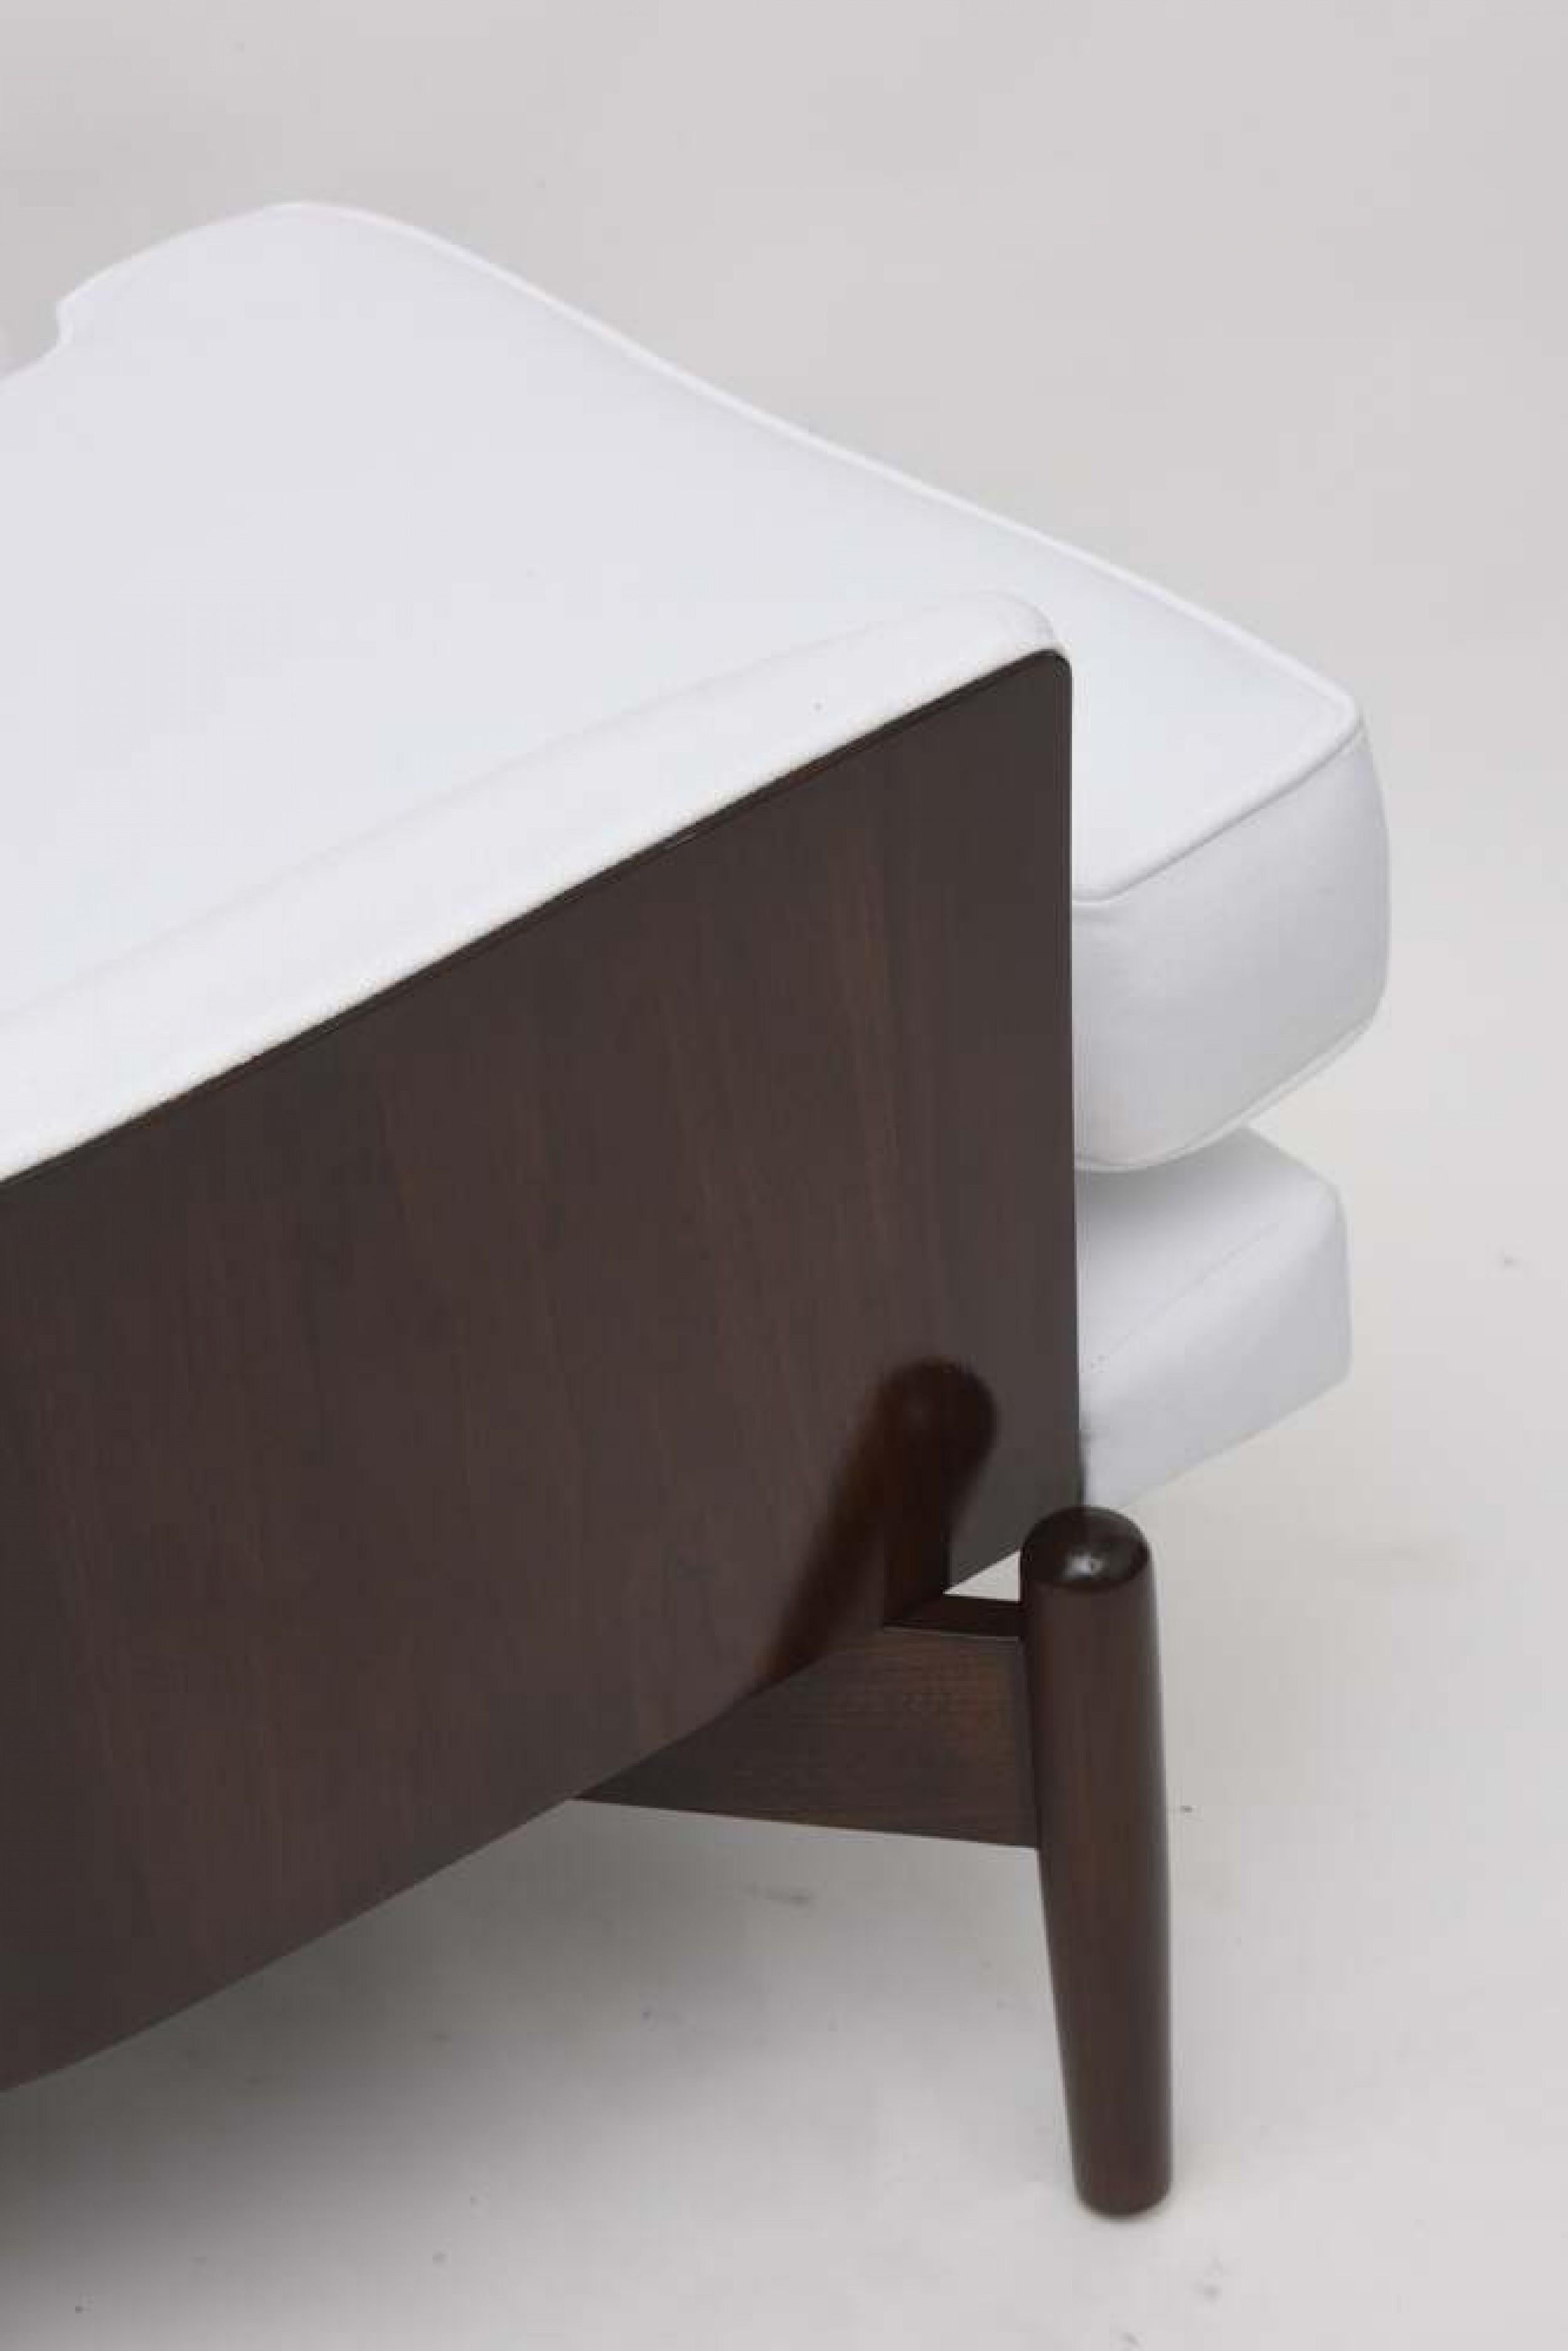 Ib Kofod Larsen Midcentury Danish Modern Walnut and White Upholstery Armchair For Sale 5